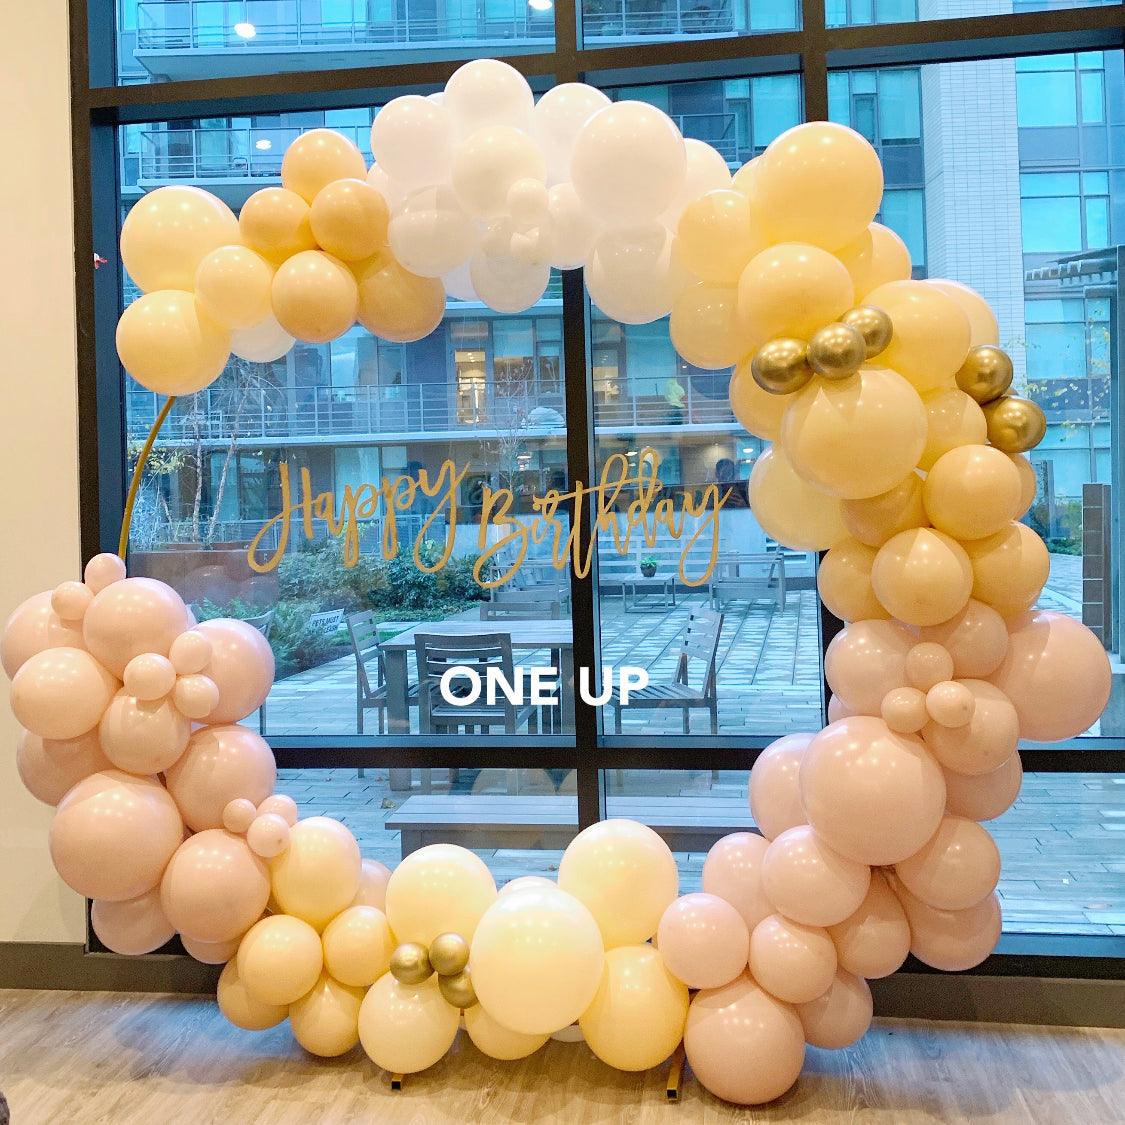 Birthday Circle Fun - Instagram Ready Creamy Dream Colour Theme - ONE UP BALLOONS